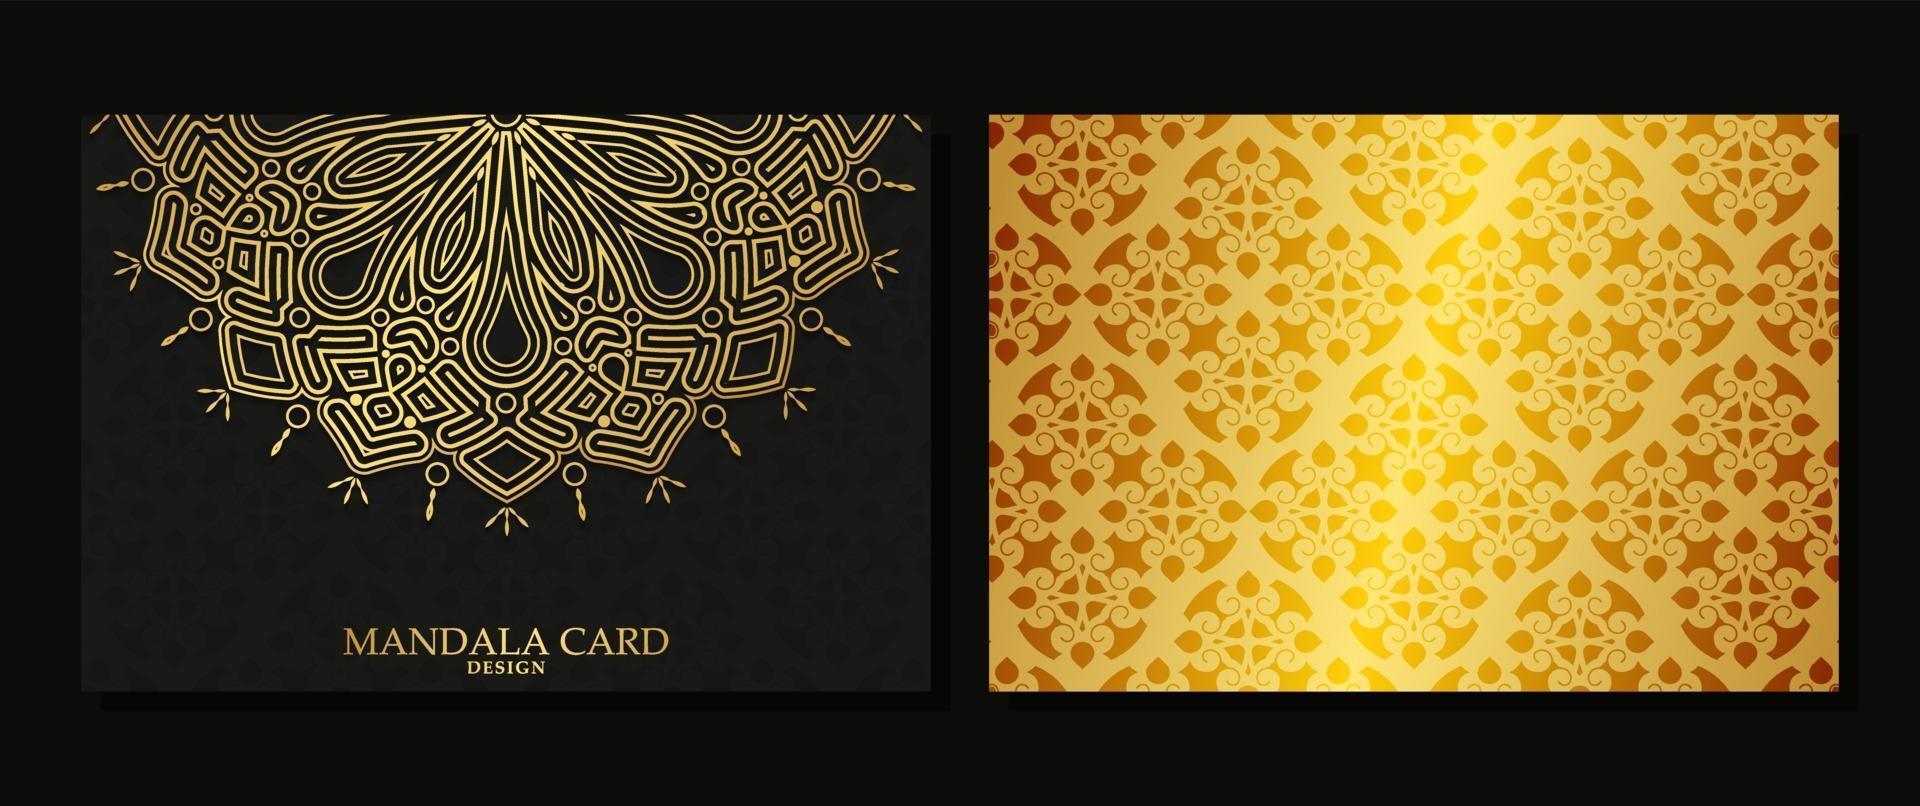 Luxury dark background mandala card vector